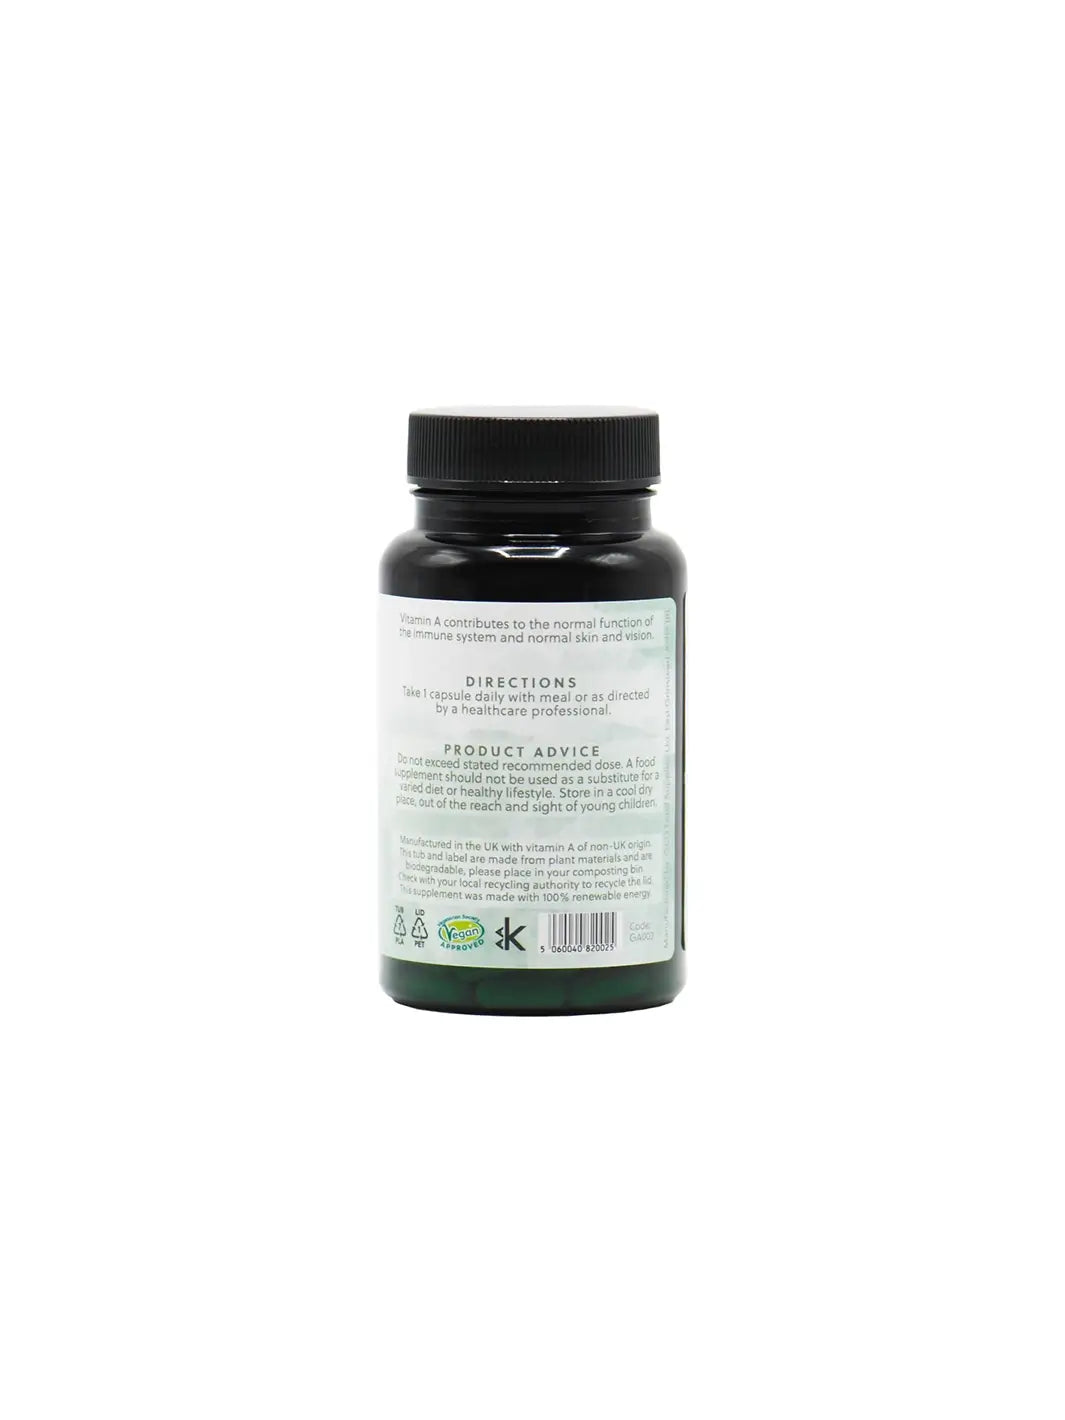 Vitamina A (retinol) 5000UI - 120 capsule